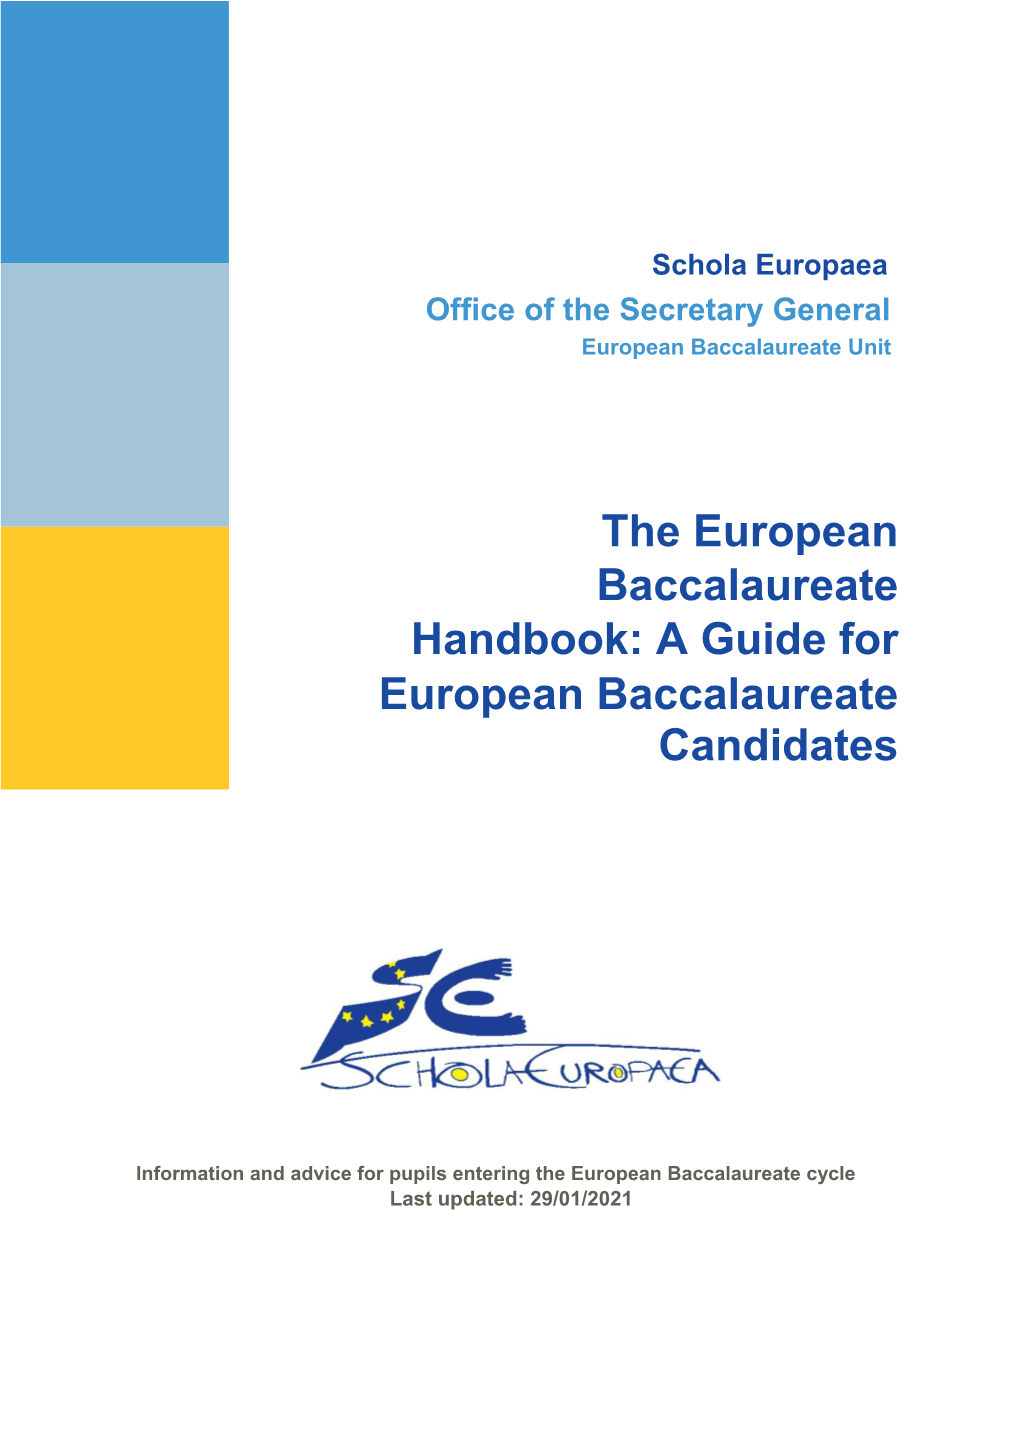 The European Baccalaureate Handbook: a Guide for European Baccalaureate Candidates